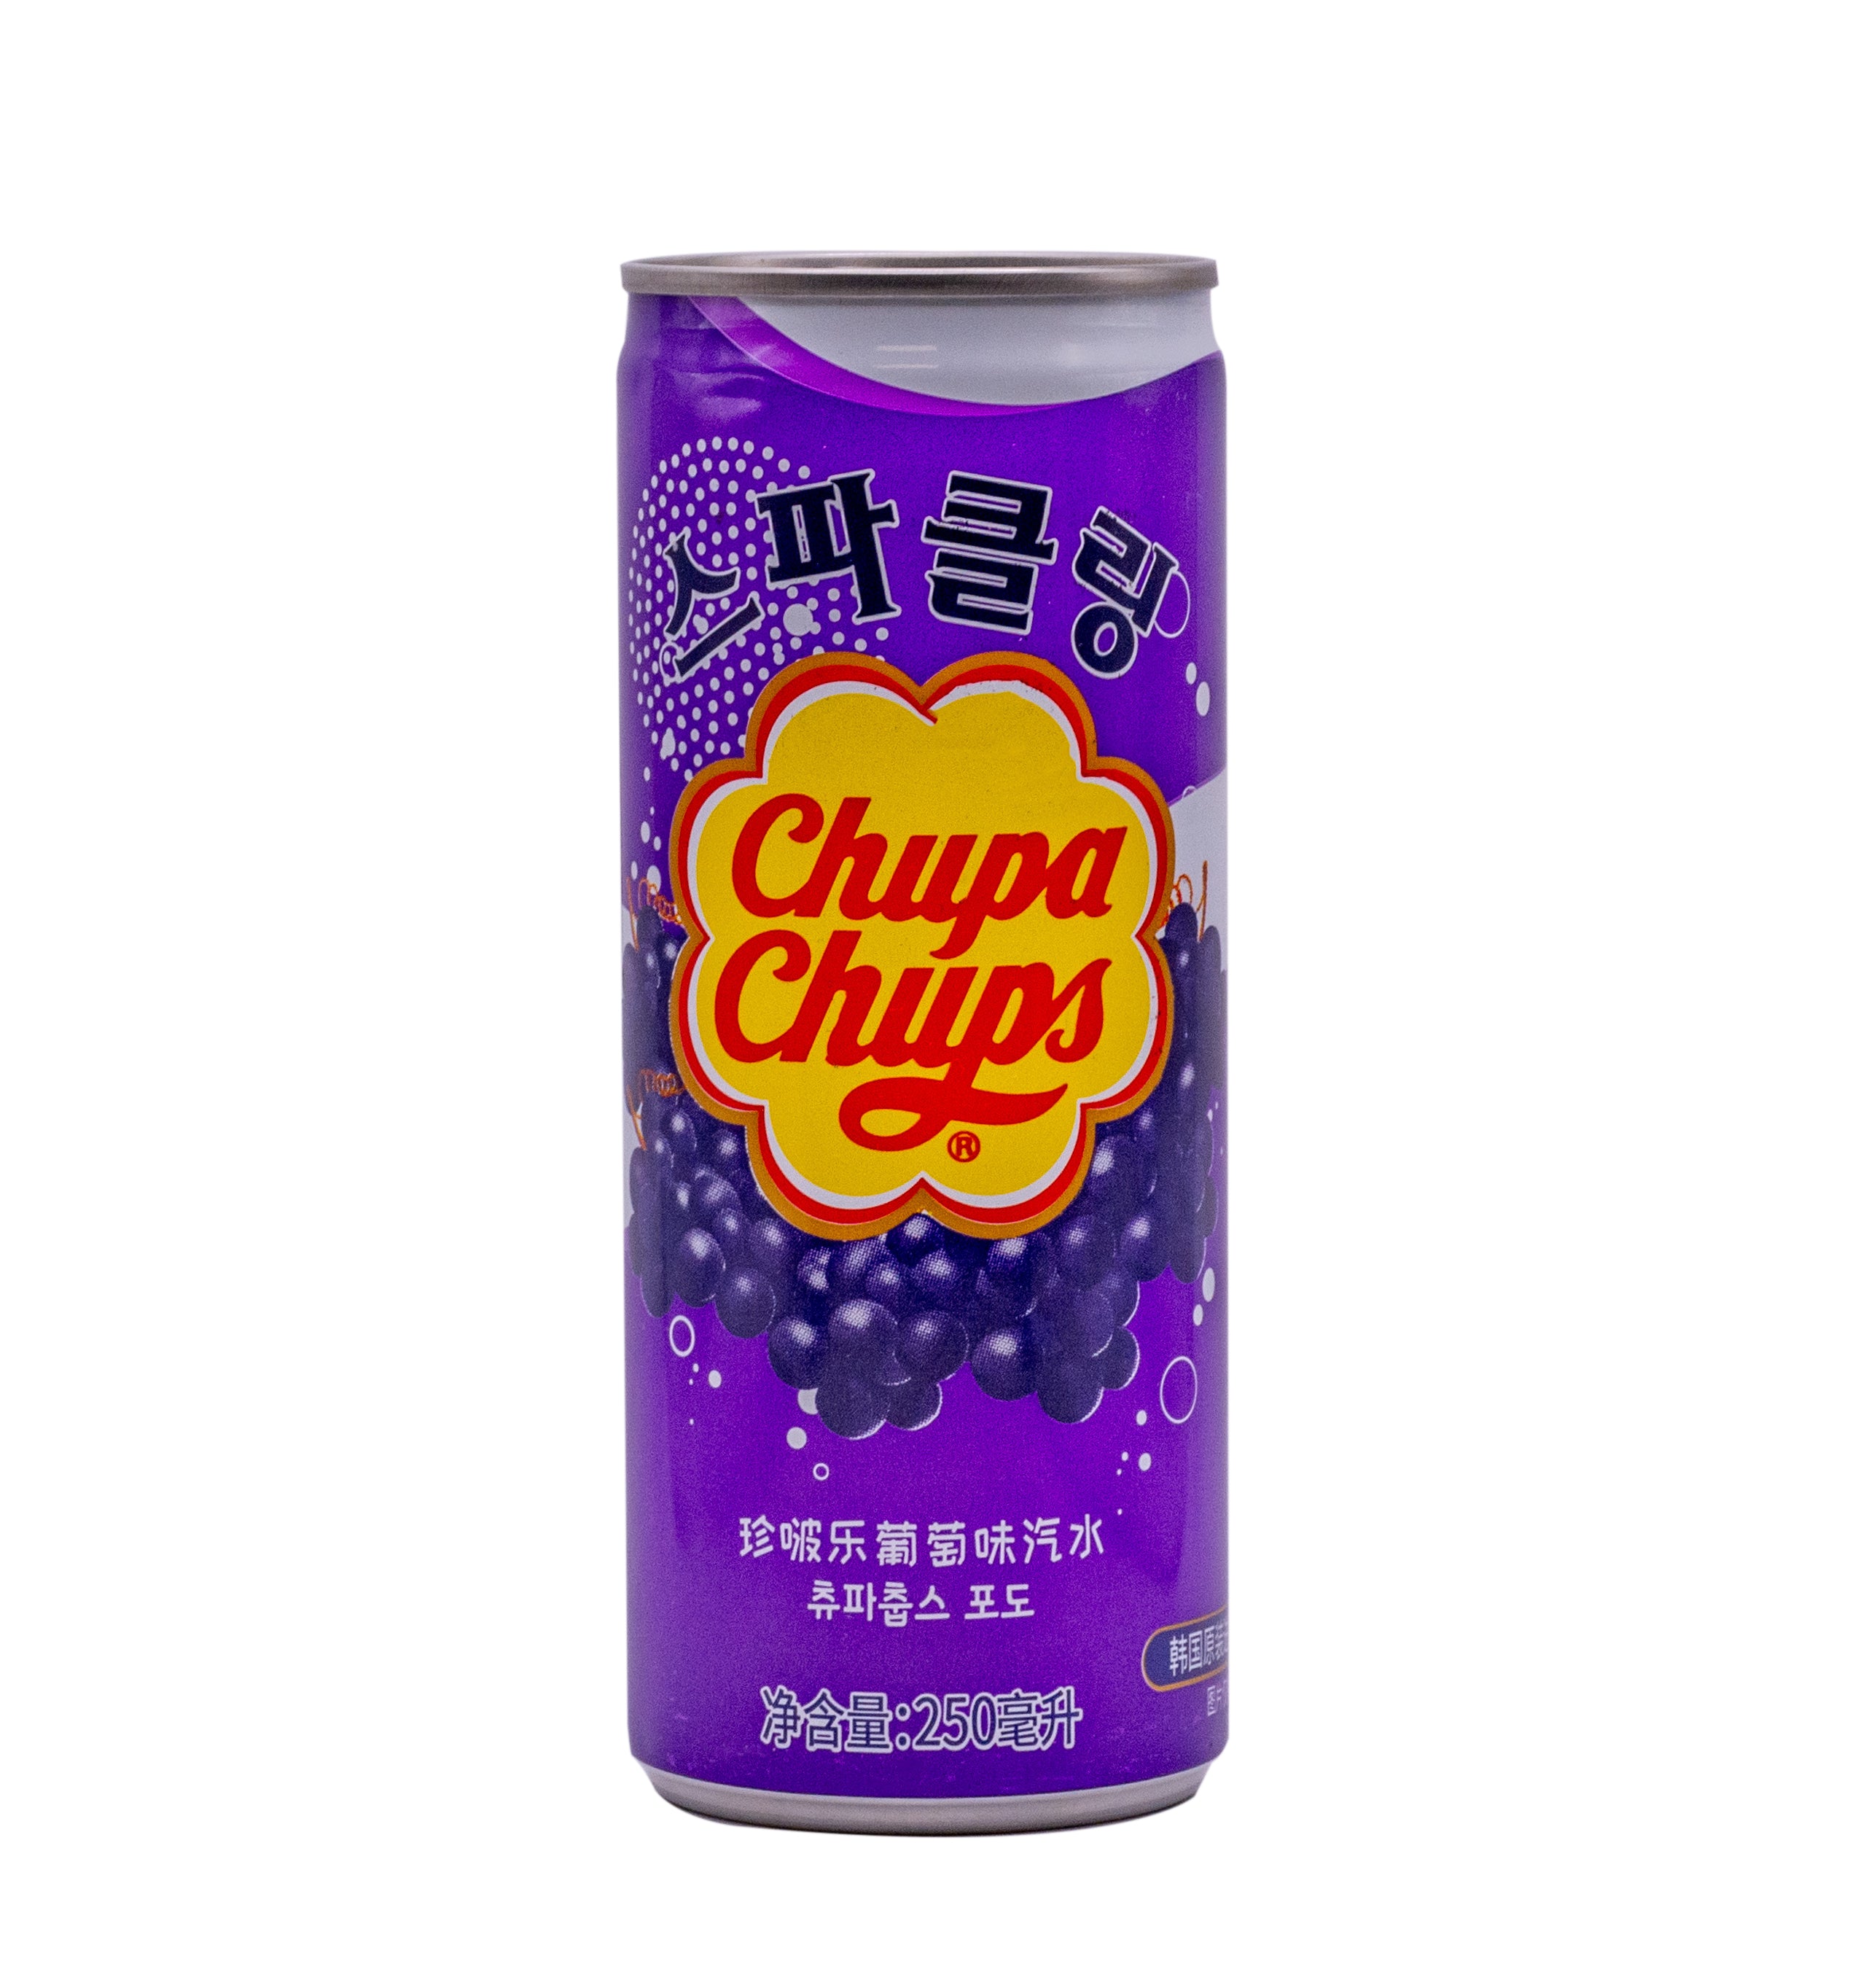 Chupa Chups - Beverage - Sparkling Grape - 250ml(Korea)